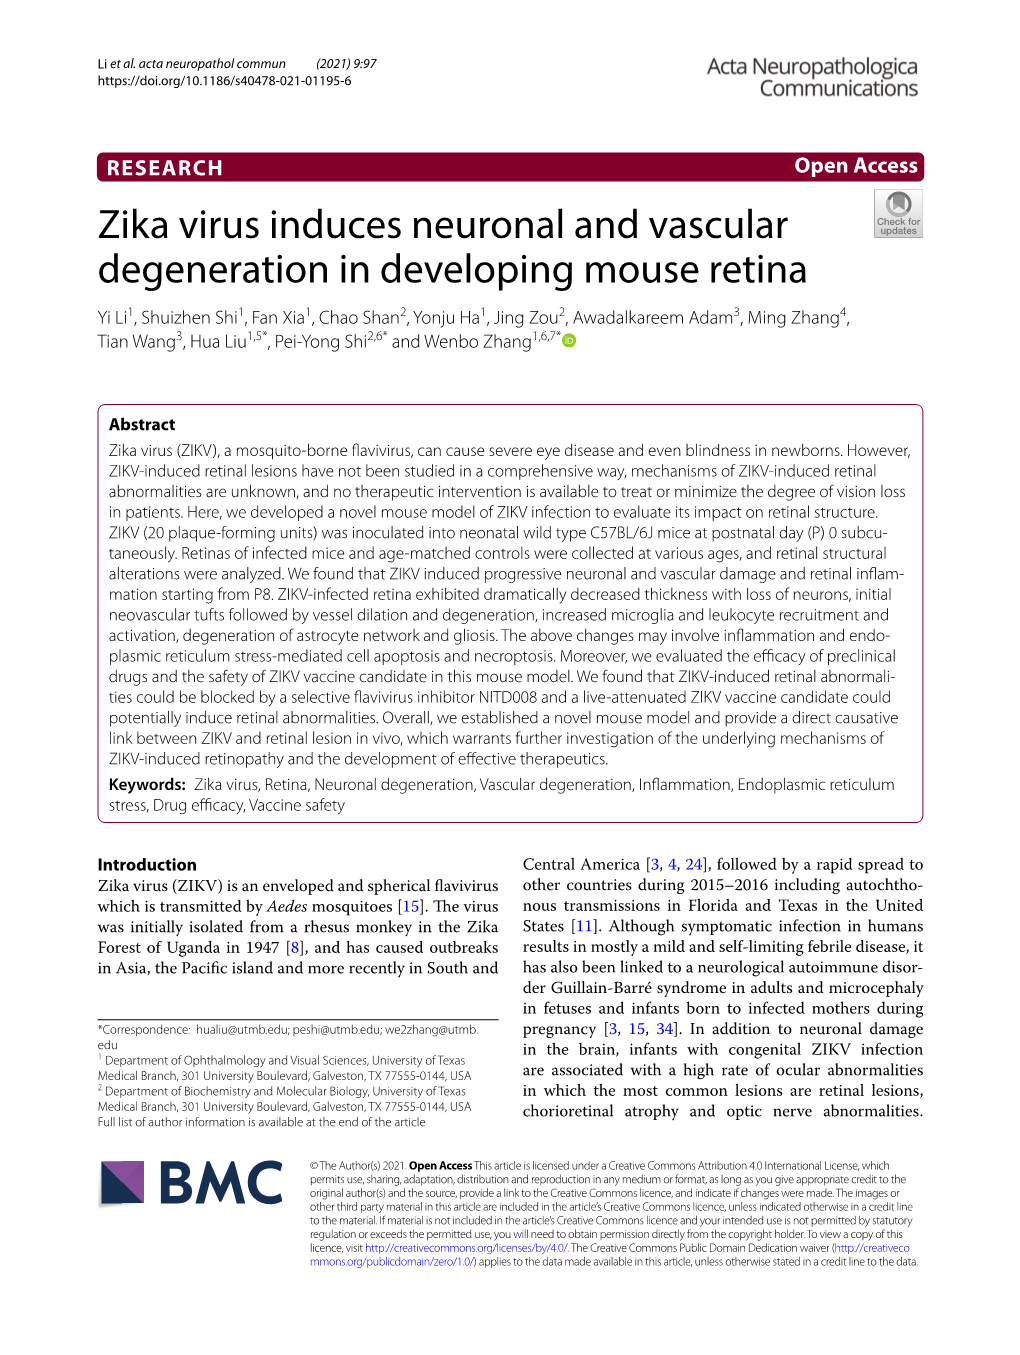 Zika Virus Induces Neuronal and Vascular Degeneration In